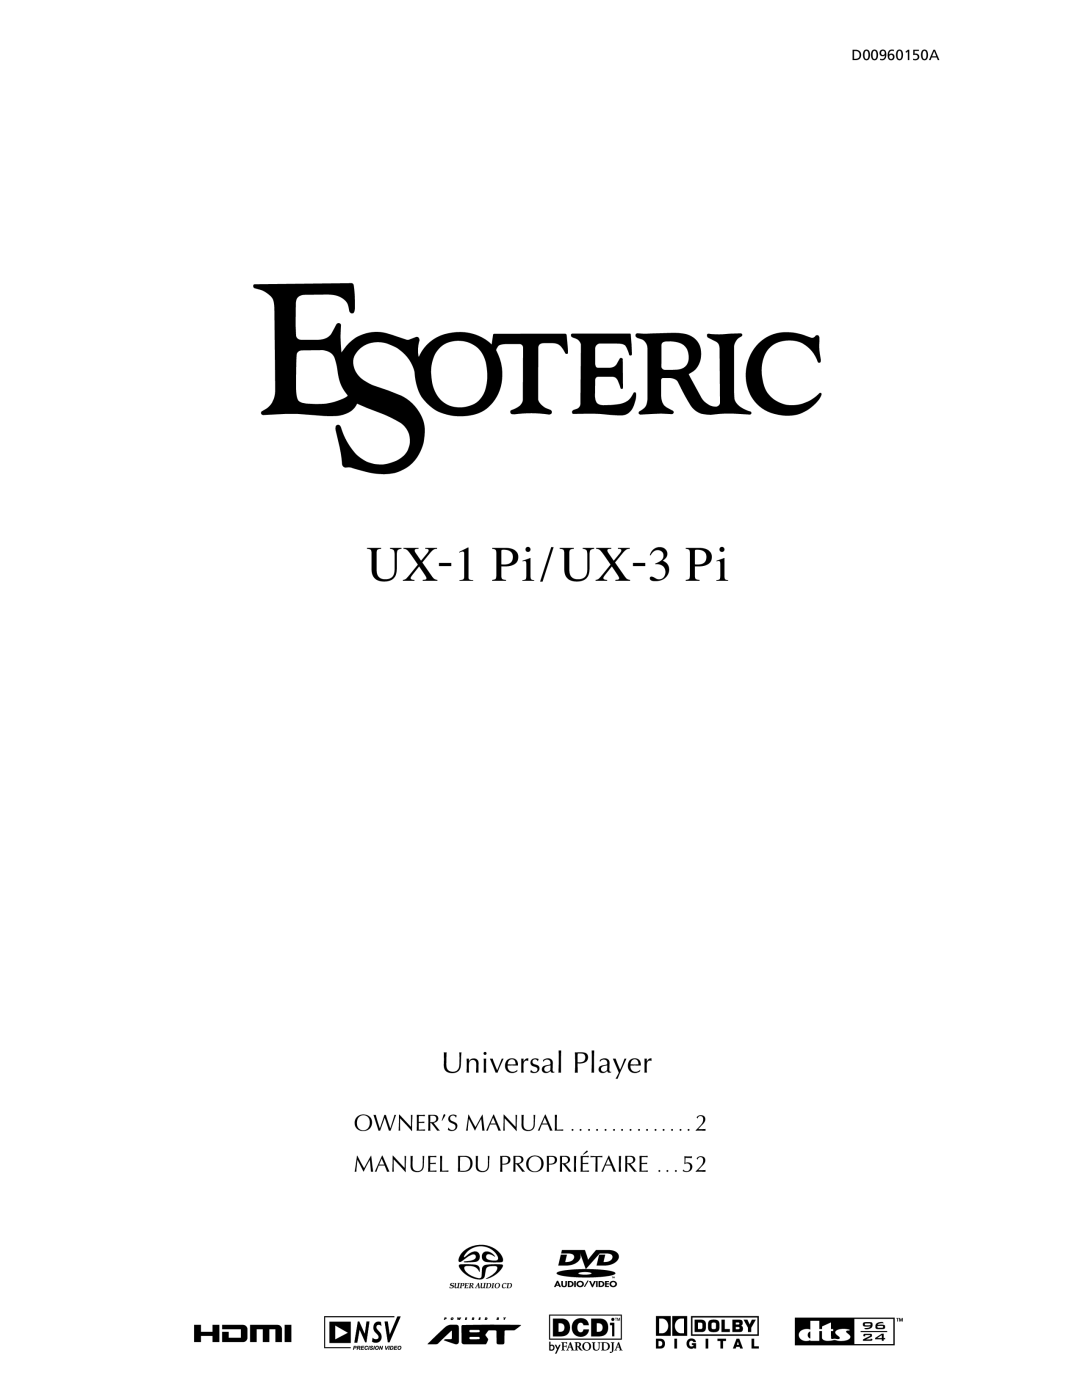 Esoteric owner manual UX-1 Pi/UX-3 Pi, Universal Player, Manuel Du Propriétaire, Owner’S Manual 